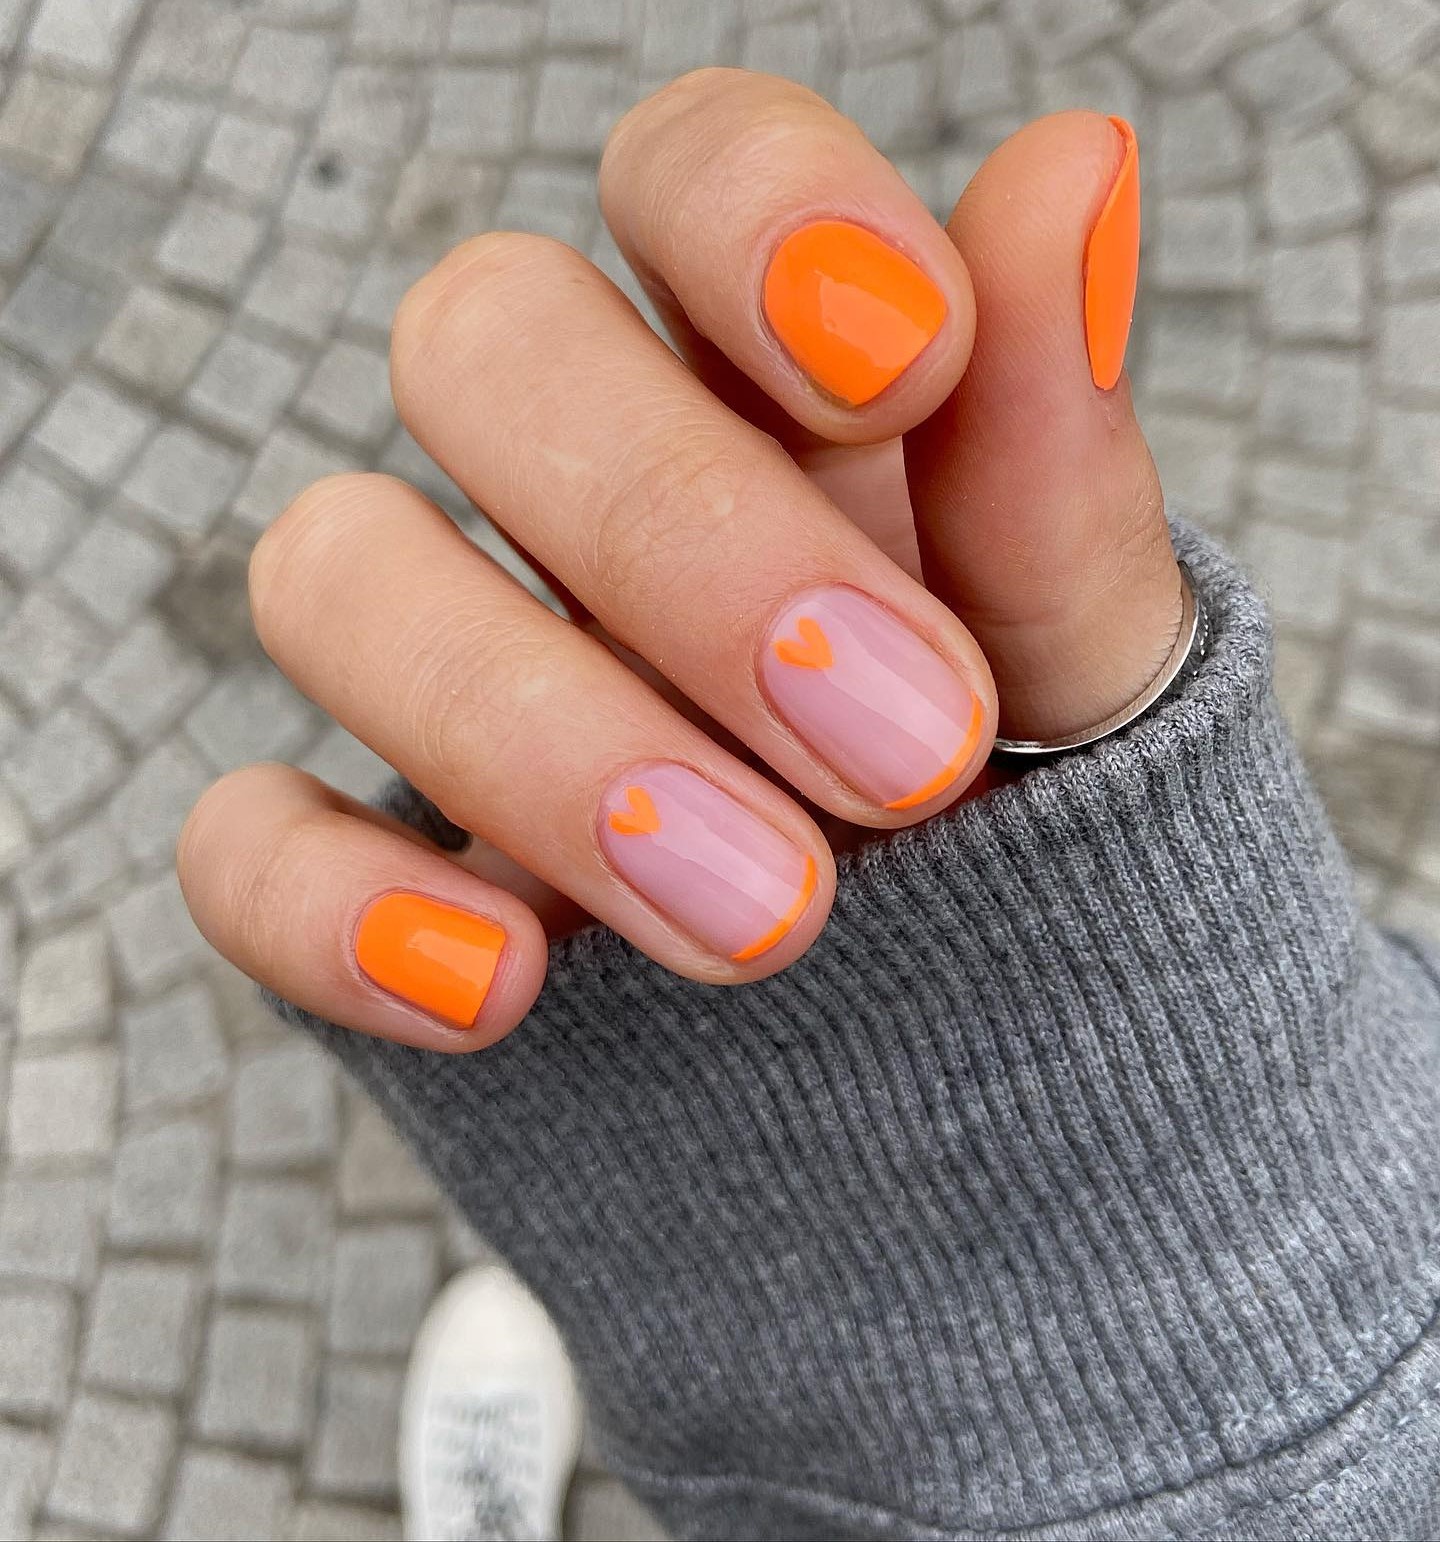 Short Orange Nails with Orange Tips and Hearts